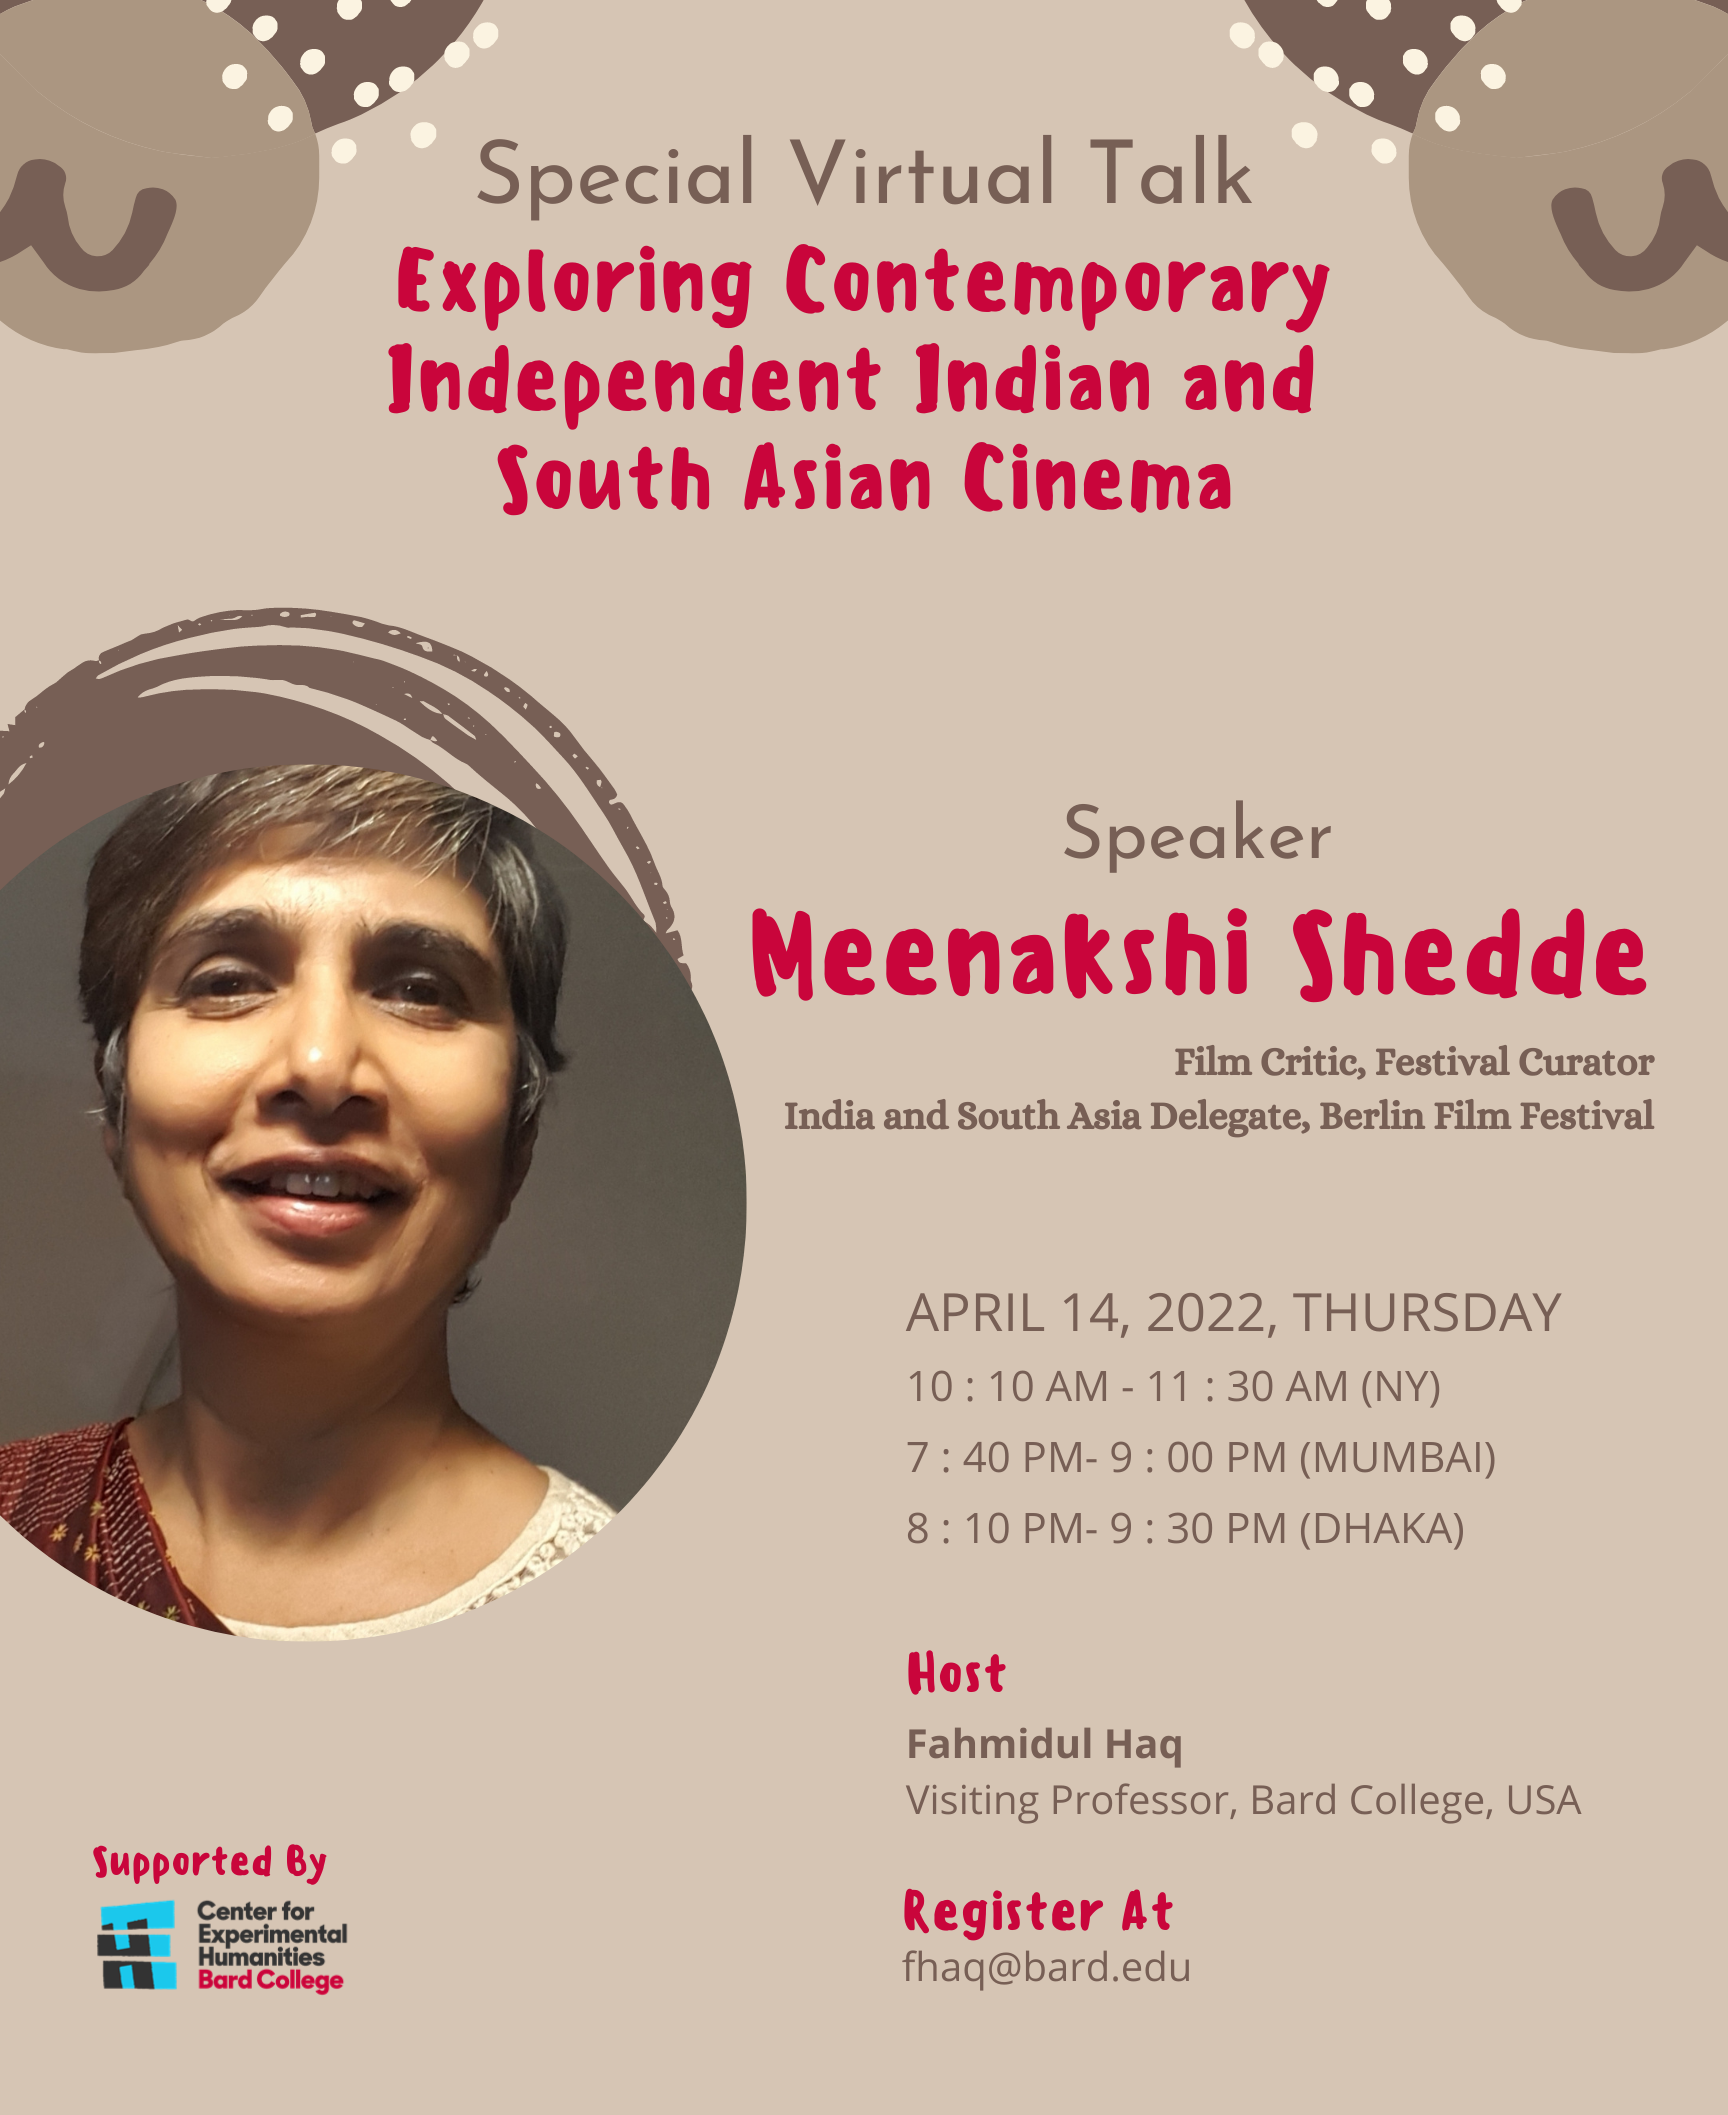 Poster. Headshot of Meenakshi Shedde. Text reads: Special Virtual Talk. Exploring Contemporary and Independent Indian and South Asian Cinema. Speaker: Meenakshi Shedde. Film critic, festival curator. India and South Asia delegate, Berlin film festival. April 14, 2022, Thursday. 10:10AM - 11:30 AM (NY). 7:40PM-9:00PM (Mumbai). 8:10PM-9:30 PM (Dhaka). Host: Fahmidul Haq, Visiting Professor, Bard College, USA. Register at fhaq@bard.edu.